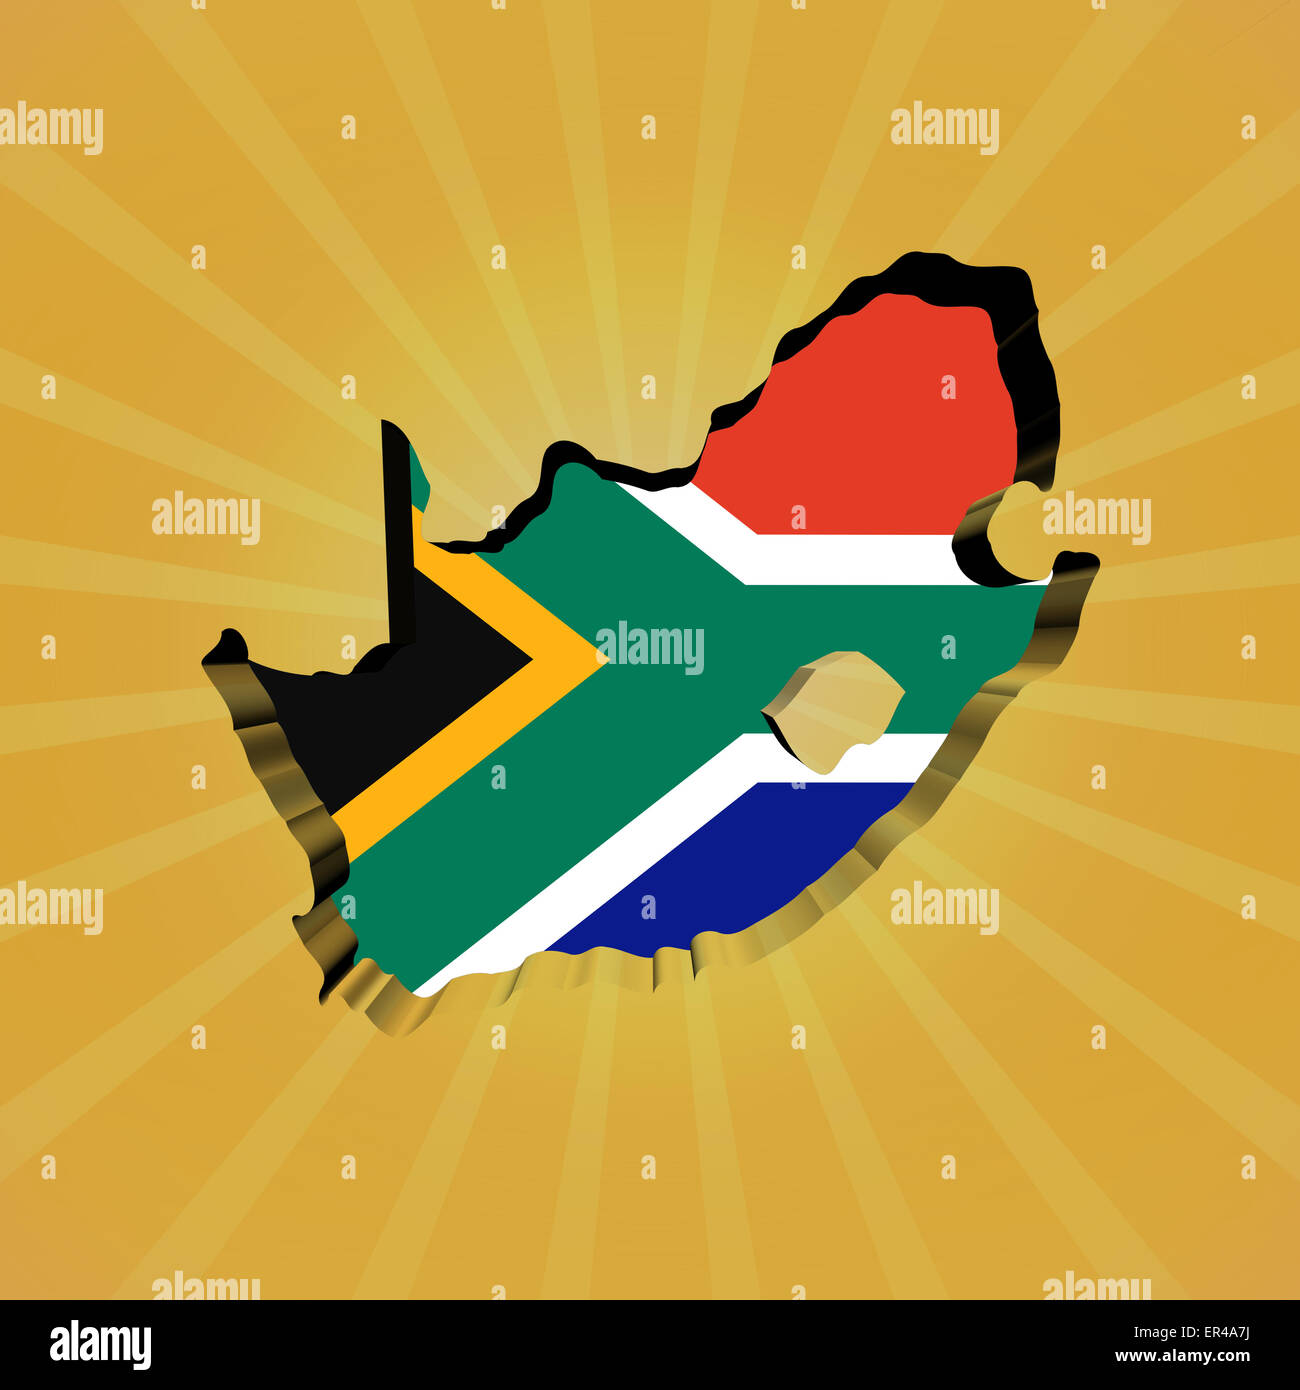 South Africa sunburst map with flag illustration Stock Photo